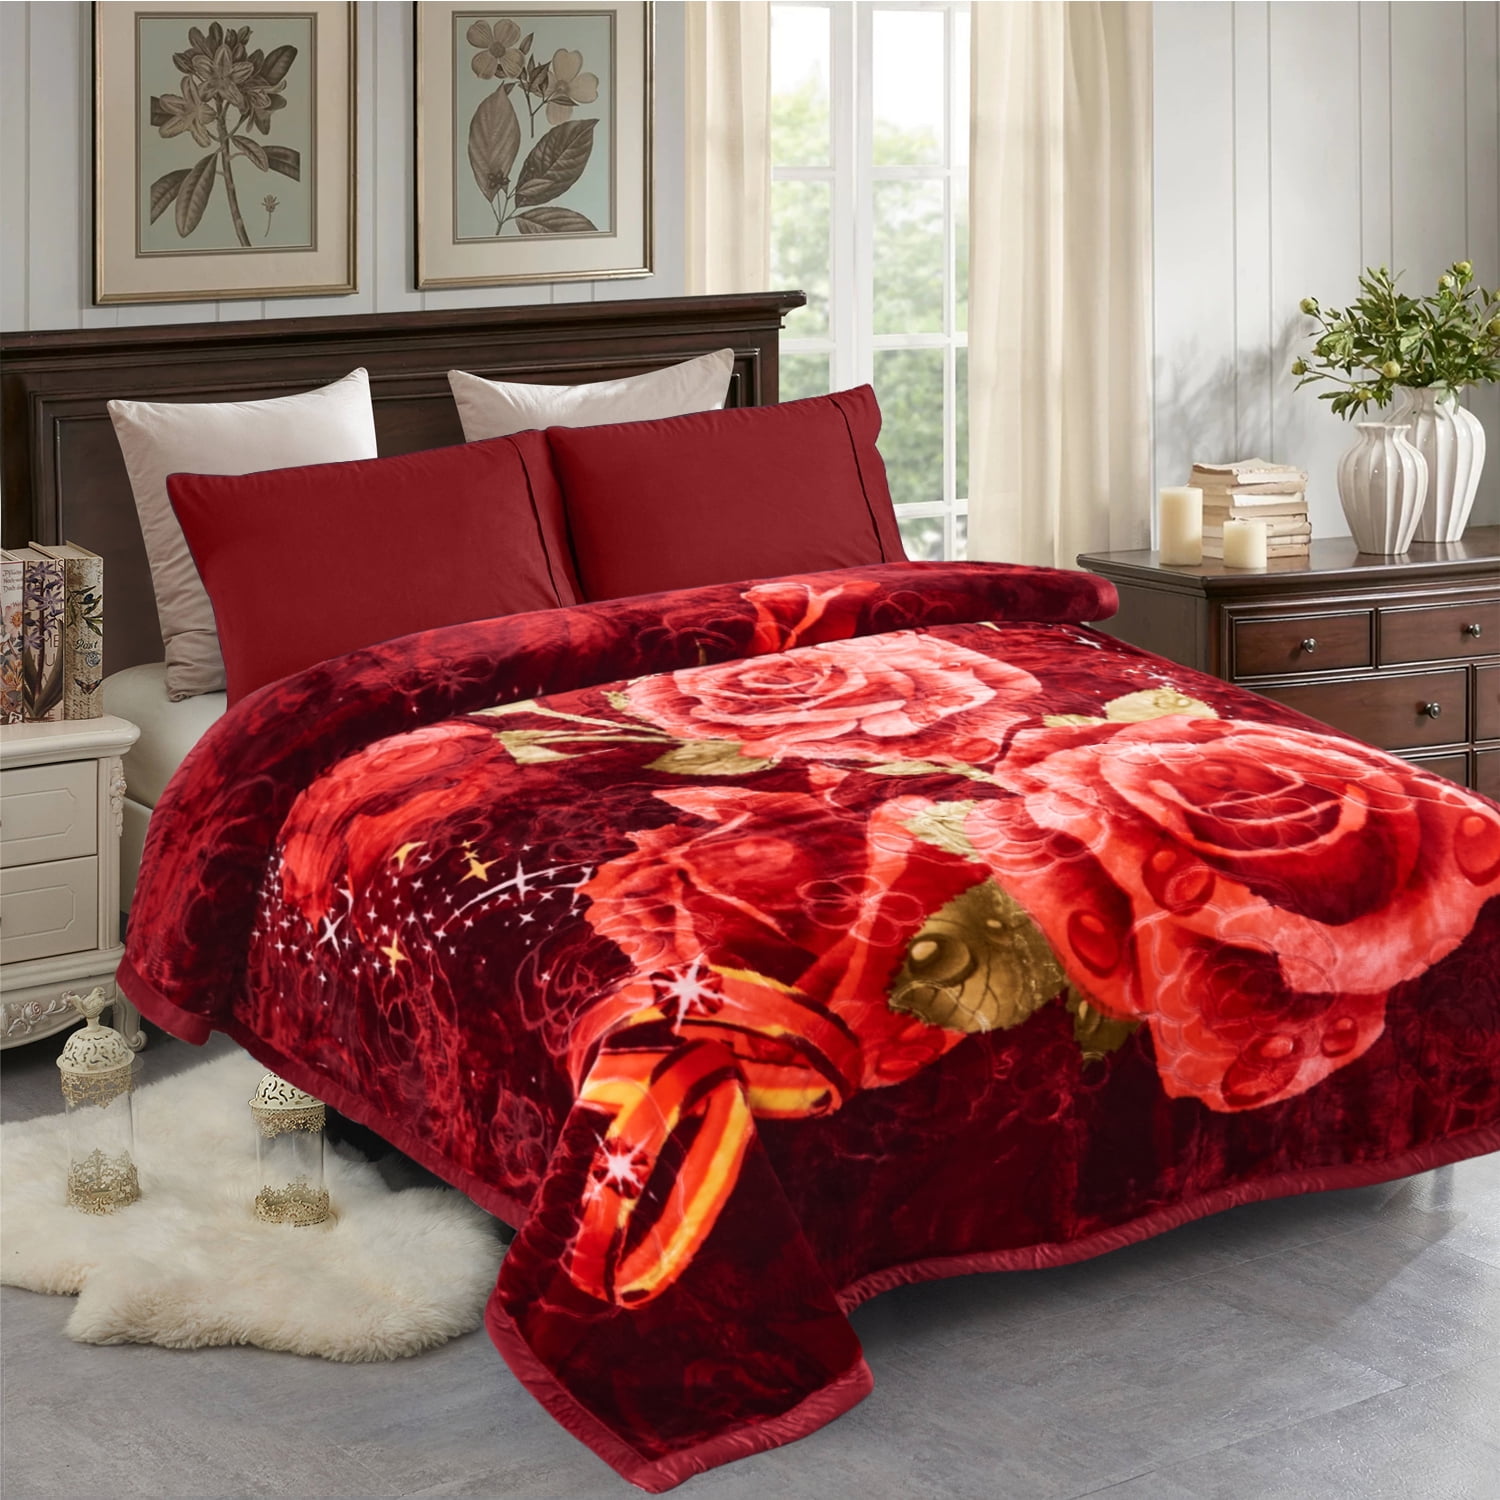 79x91, 9 lbs Heavy Korean Mink Style Fleece Blanket JML Fleece Blanket Queen Plush Fluffy Cozy Soft Warm 2 Ply Printed Raschel Bed Blankets for Winter Wedding 